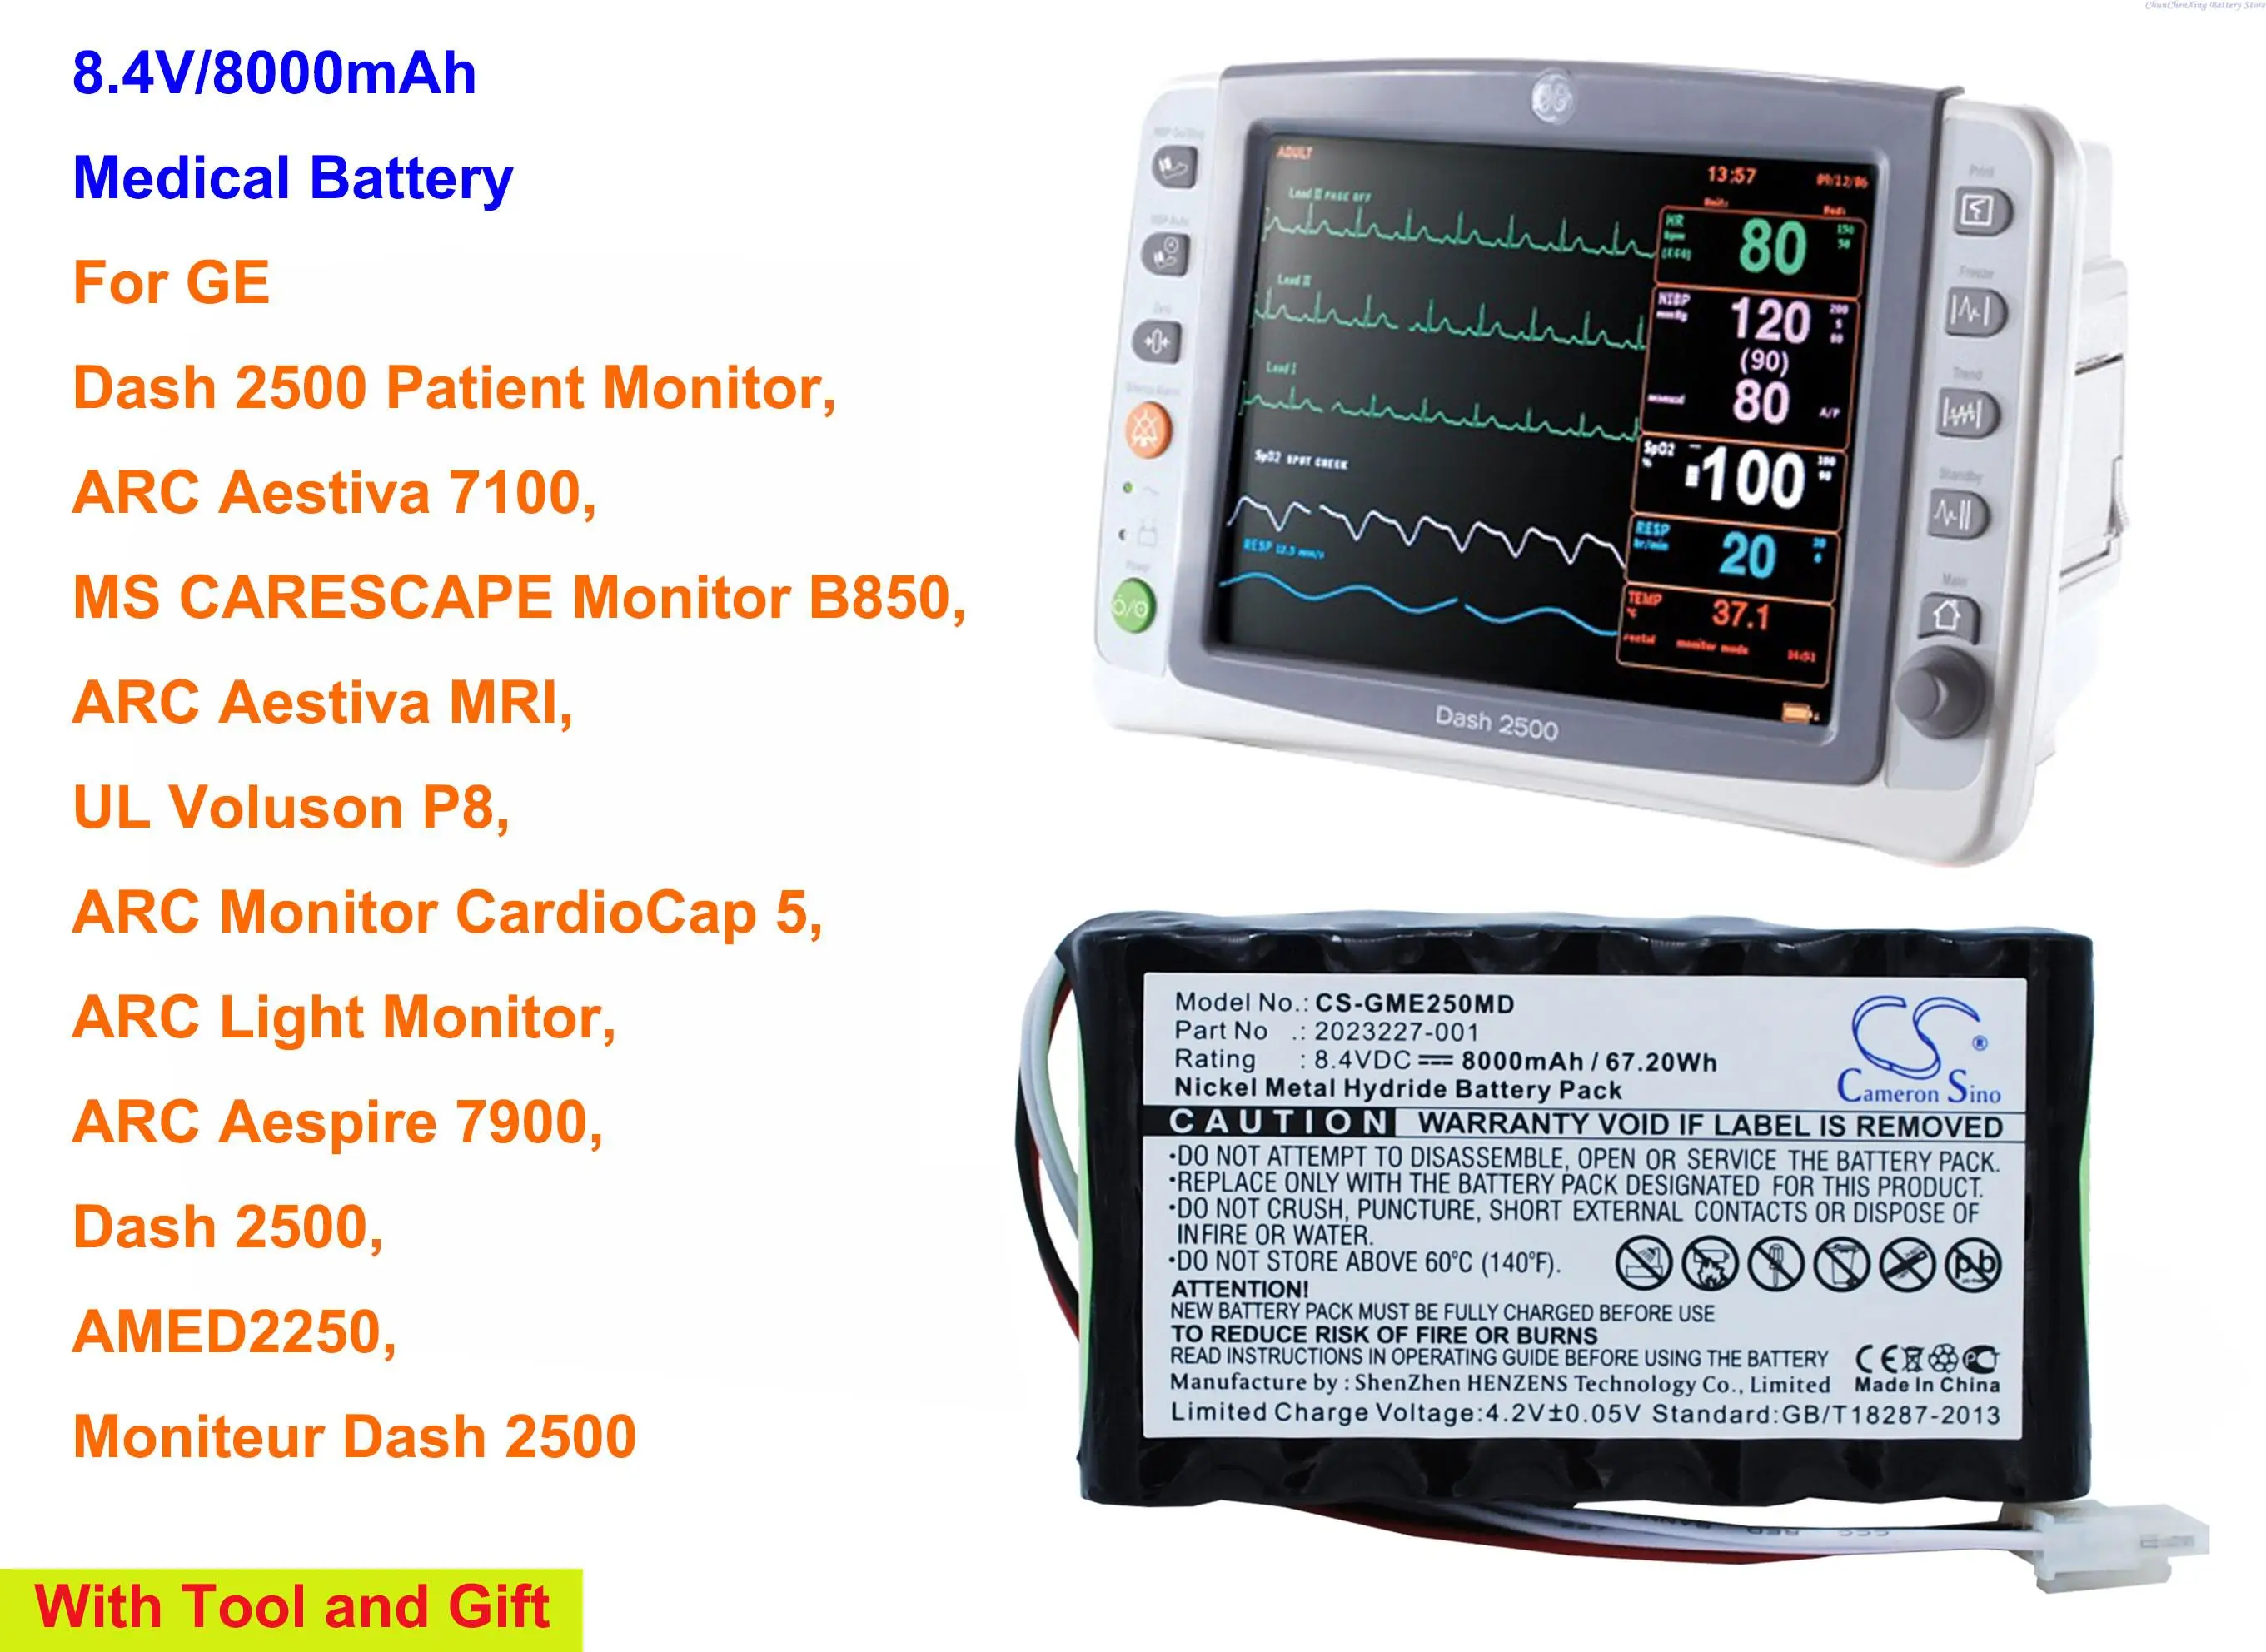 

CS 8000mAh Medical Battery for GE Dash 2500 Patient Monitor, ARC Aestiva 7100,ARC Aespire 7900, AMED2250, CardioCap 5